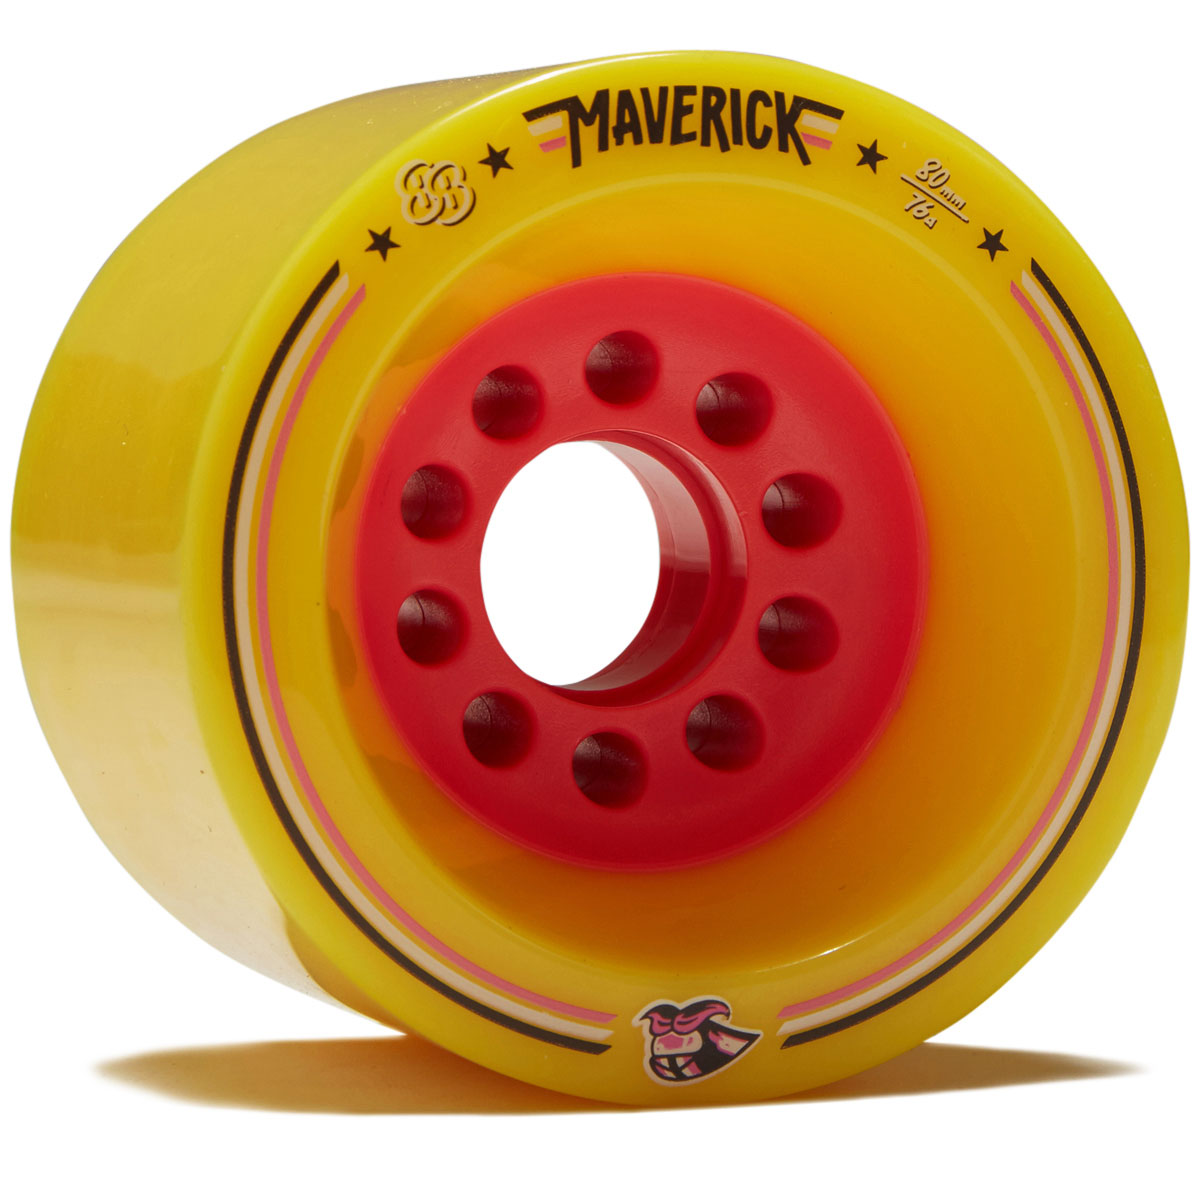 88 Wheel Co Maverick Downhill 76a Longboard Wheels - Yellow - 80mm image 1